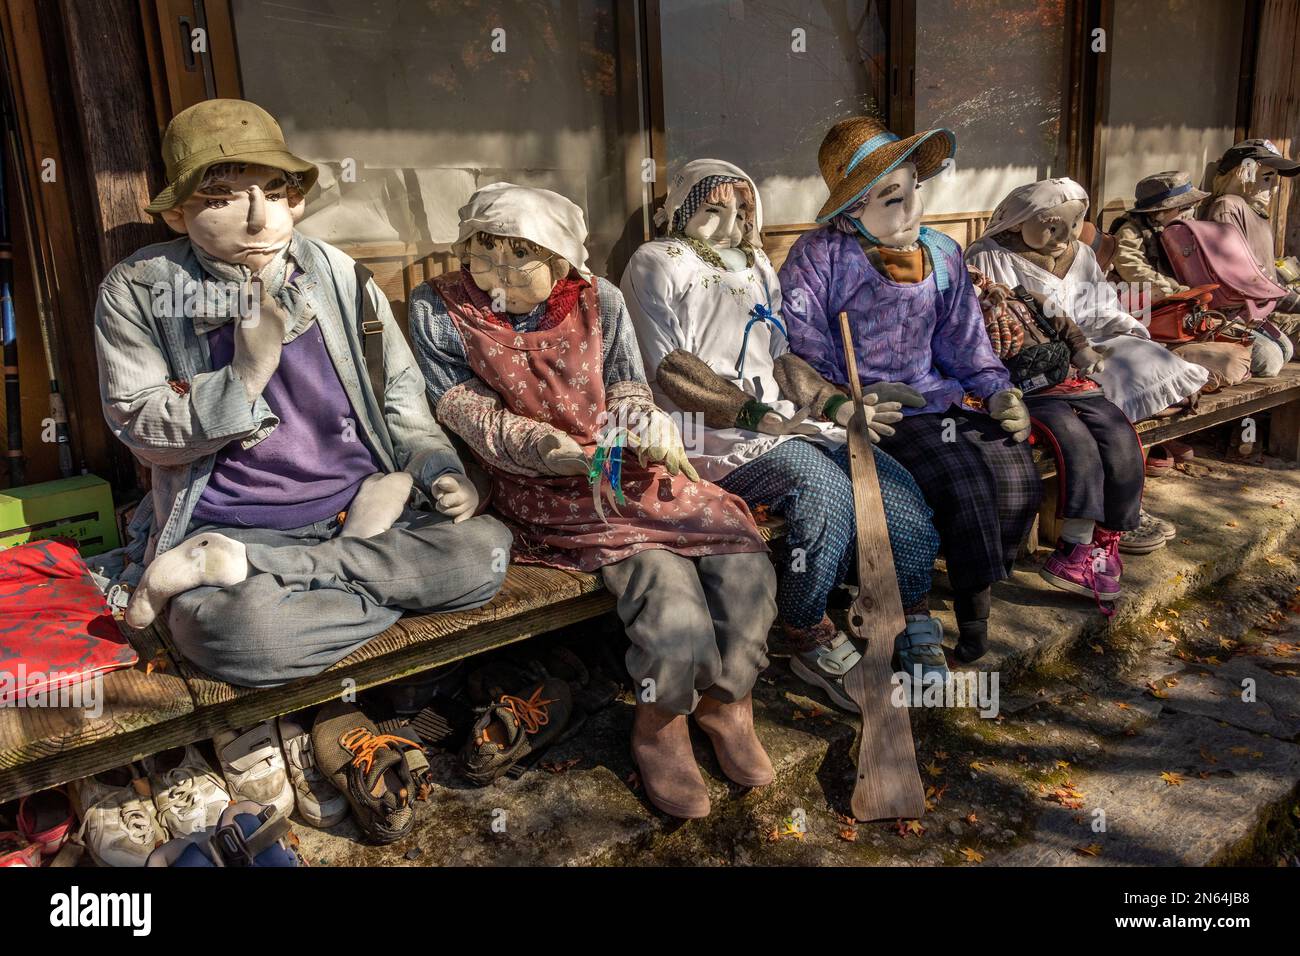 Plusieurs kakashi assis sur un banc, Nagaro Doll Village, Iya Valley, Shikoku Island, Japon Banque D'Images